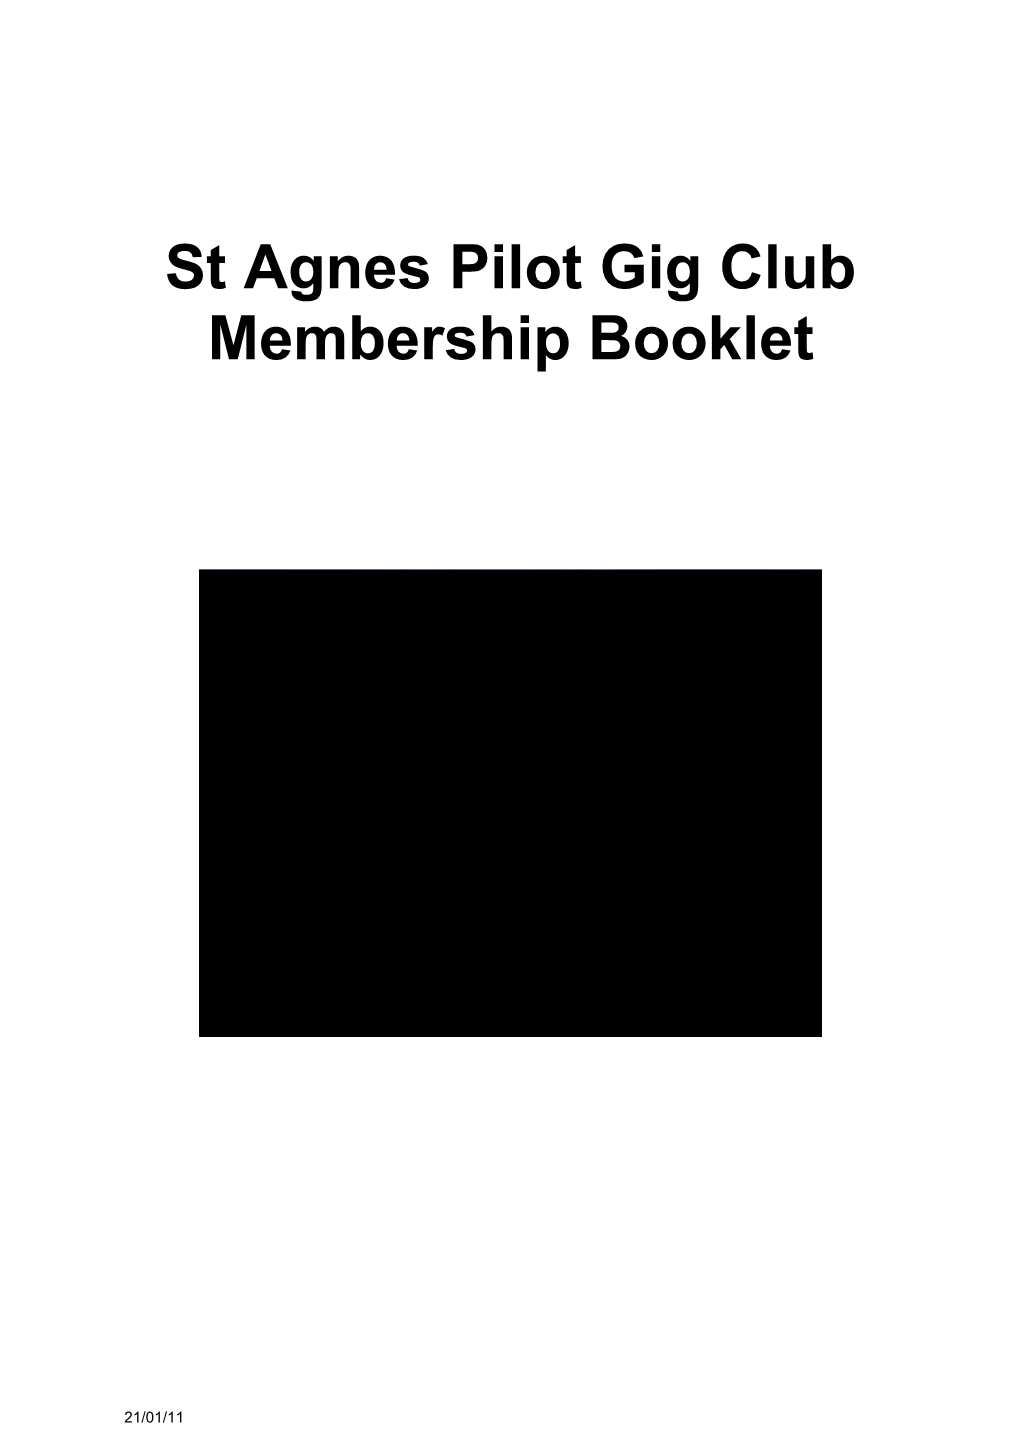 St Agnes Pilot Gig Club Membership Booklet